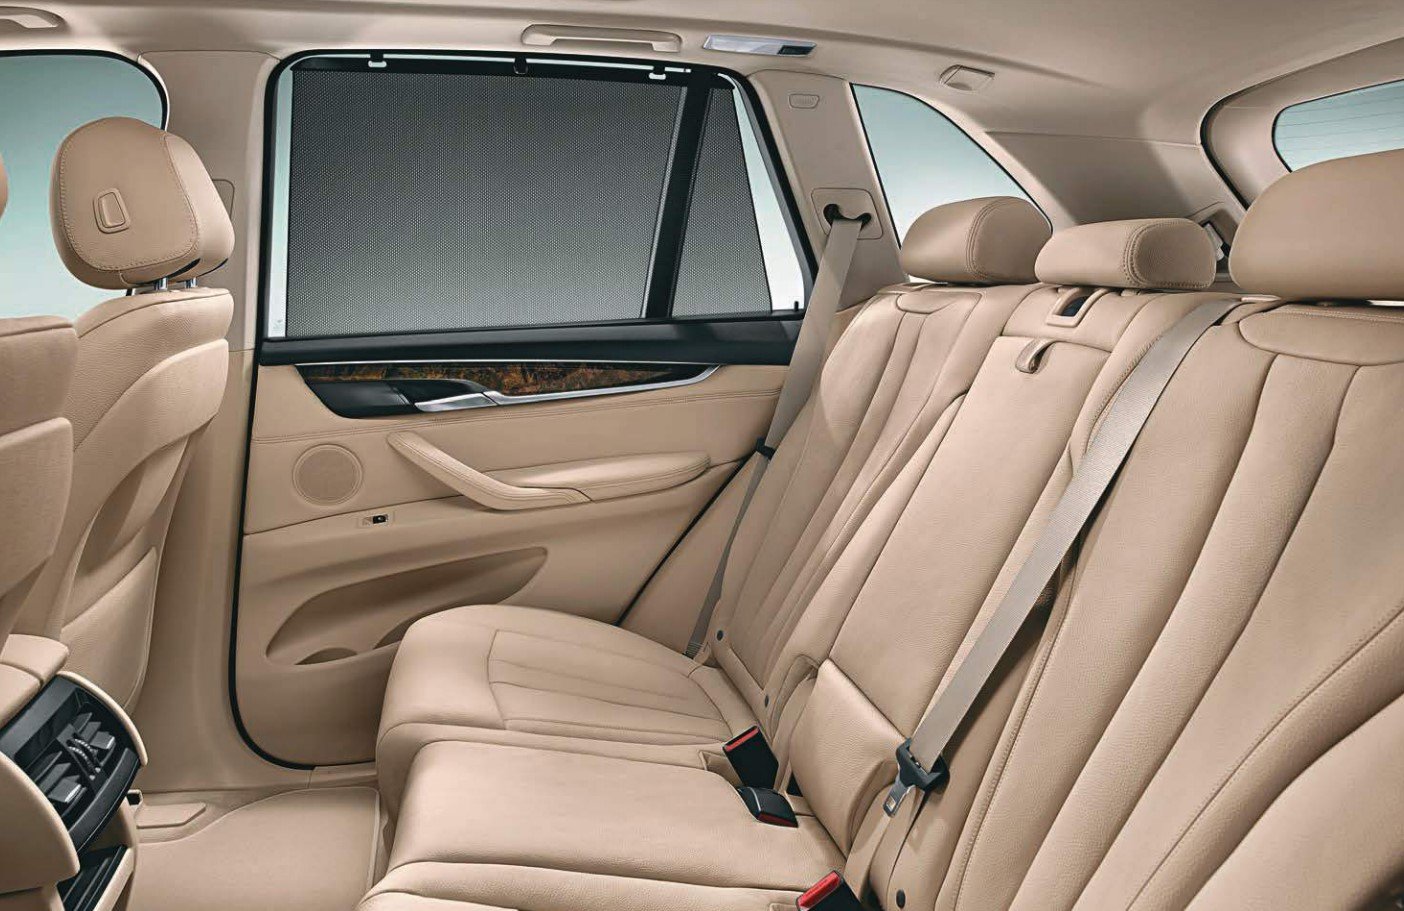 2018 bmw x5 interior rear seat